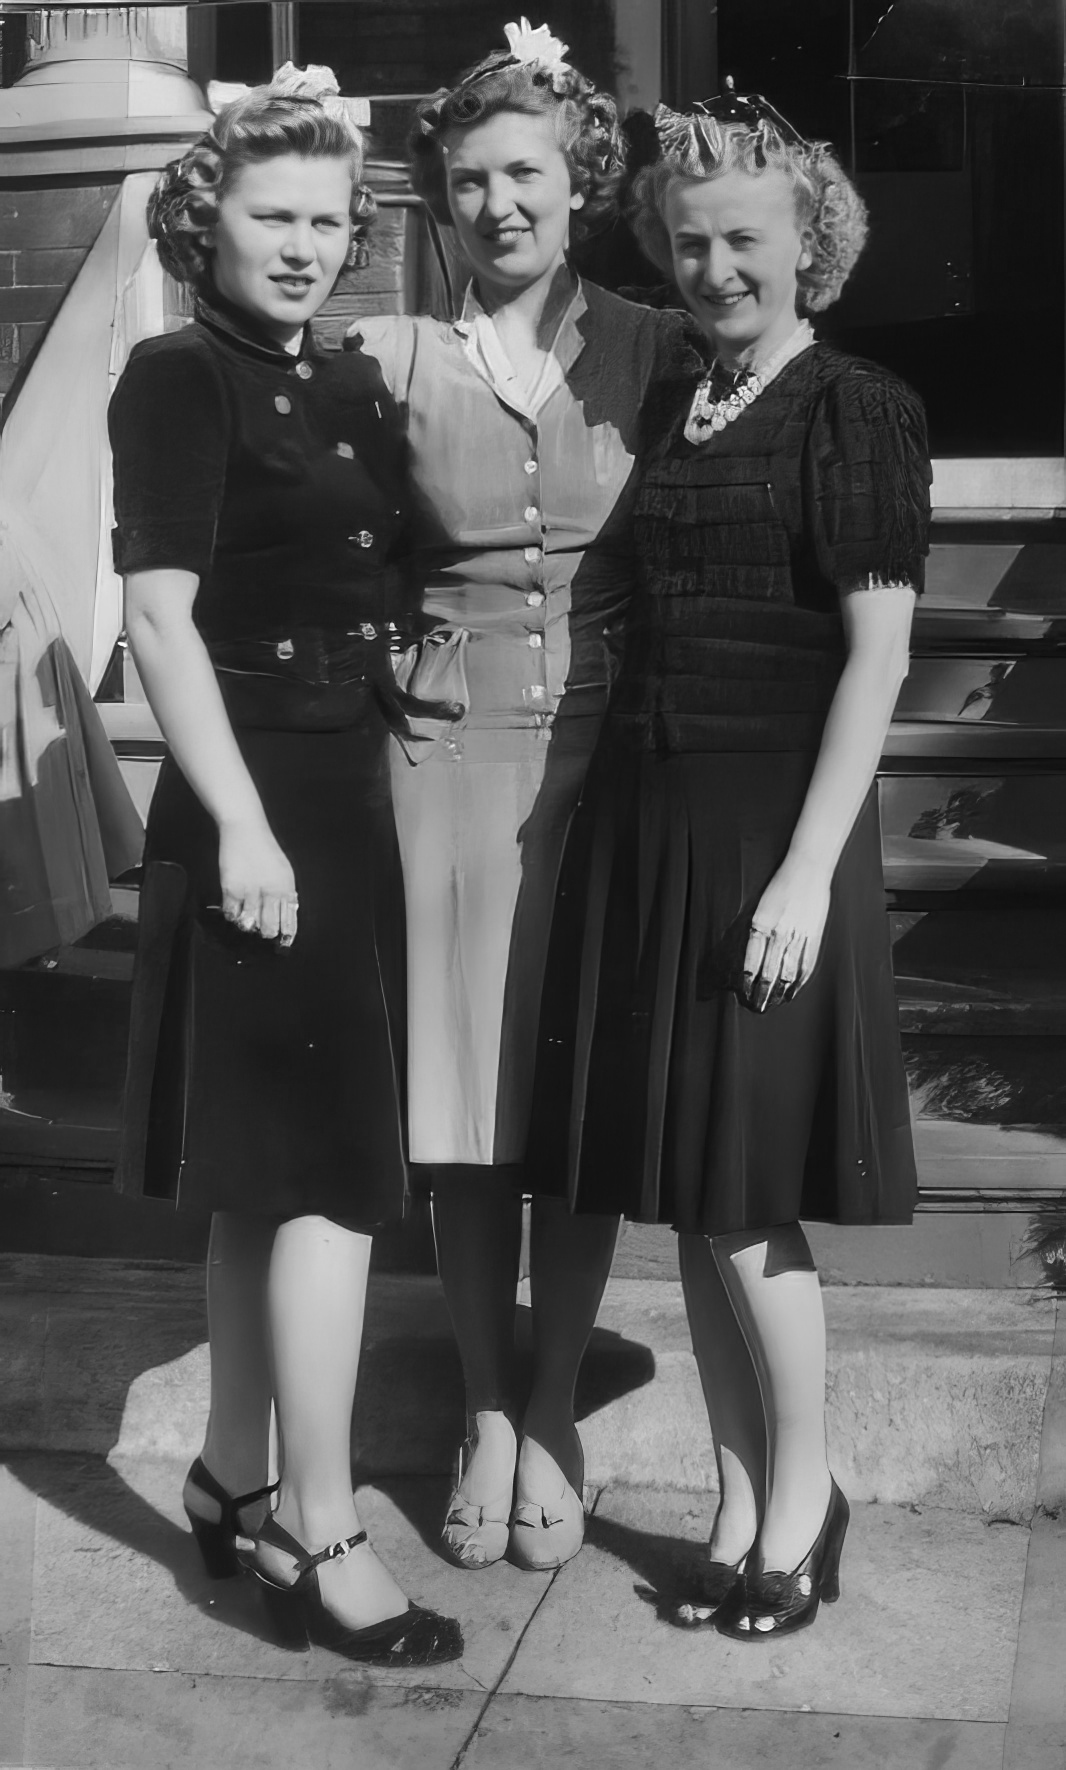 Lolus and Lorraine Bruns with cousin Loretta Murphy, c. 1942